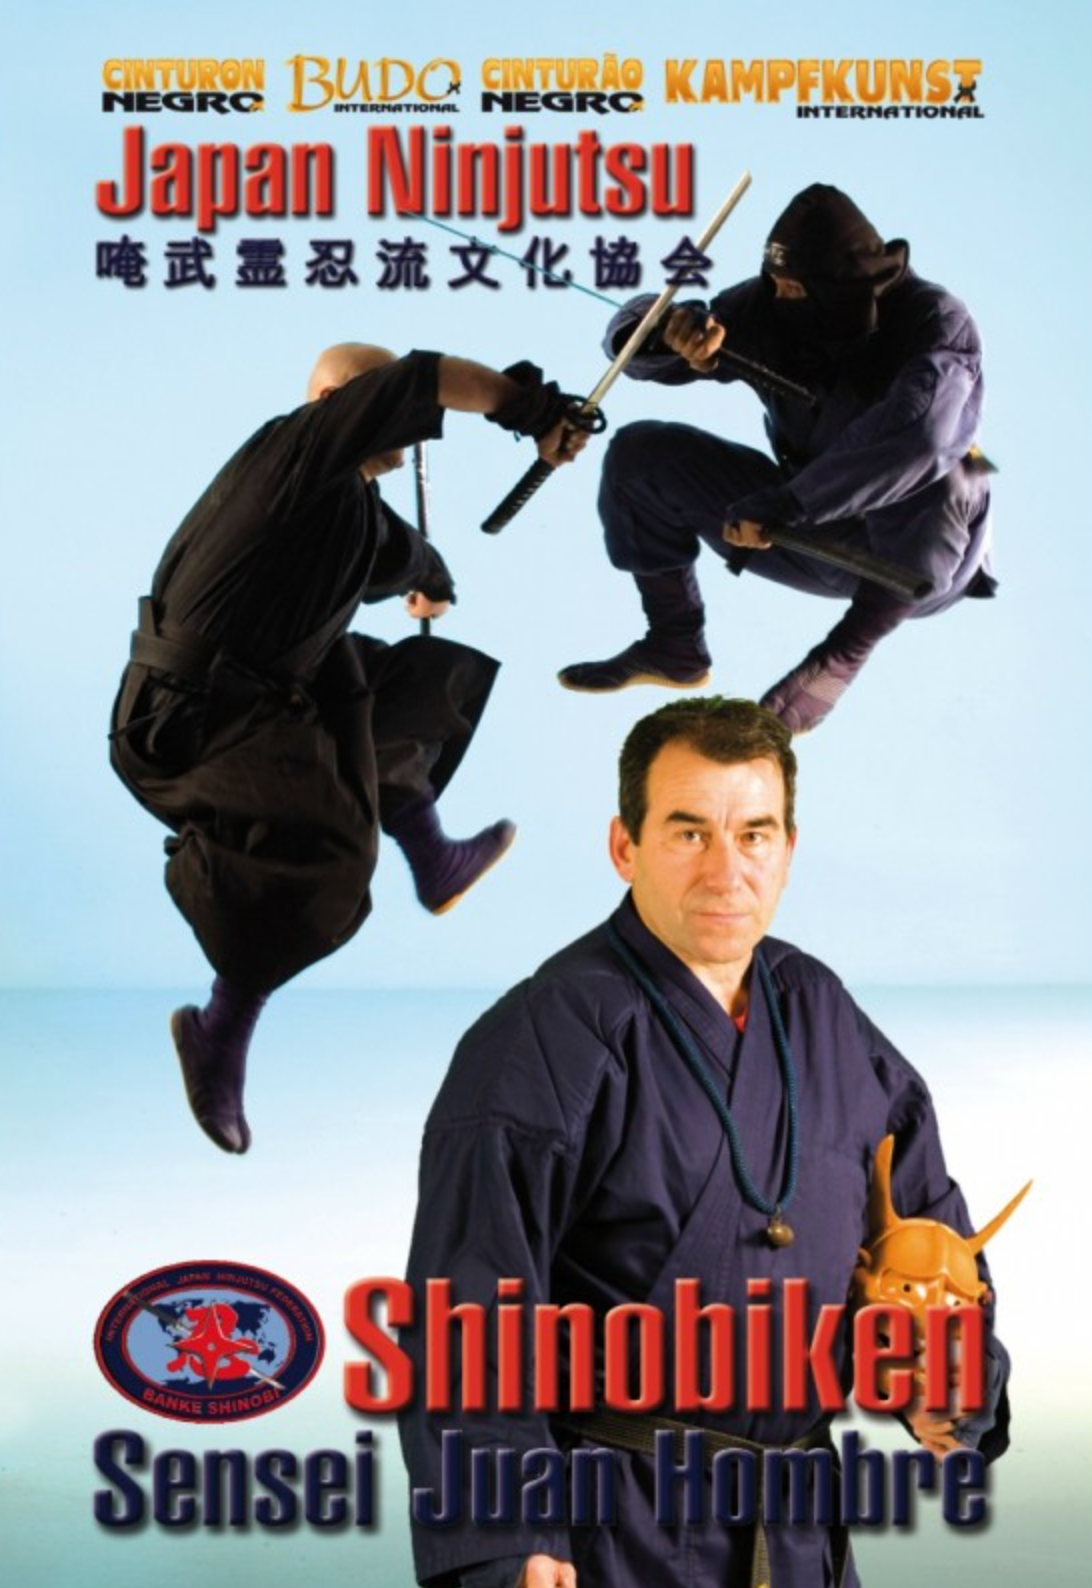 Ninjutsu Shinobiken DVD by Juan Hombre - Budovideos Inc